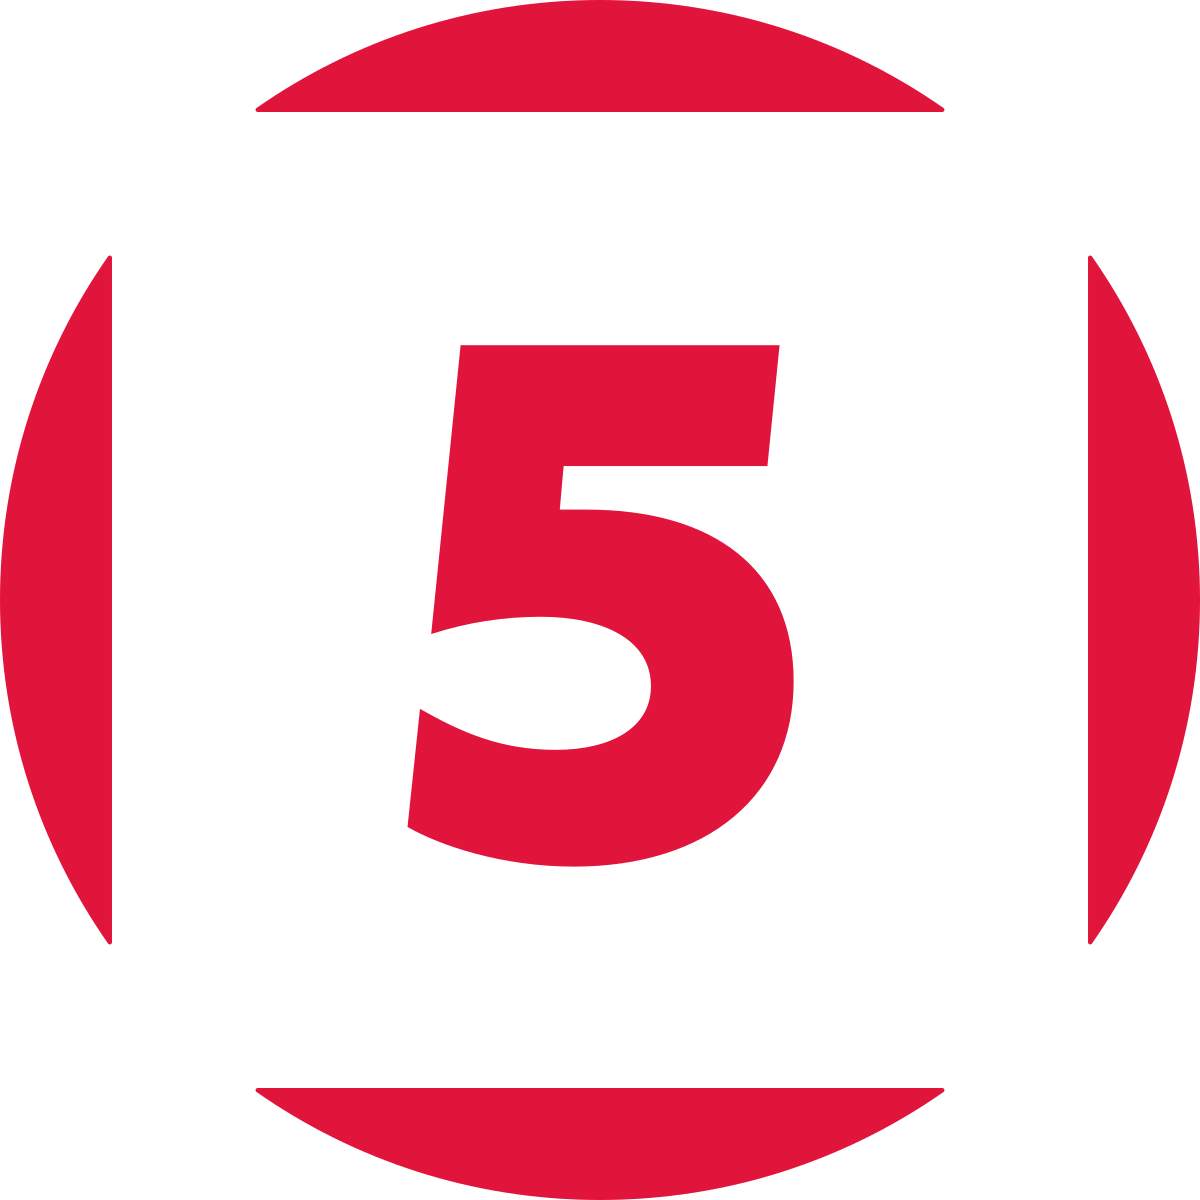 Kanal 5 (Swedish TV channel) - Wikipedia